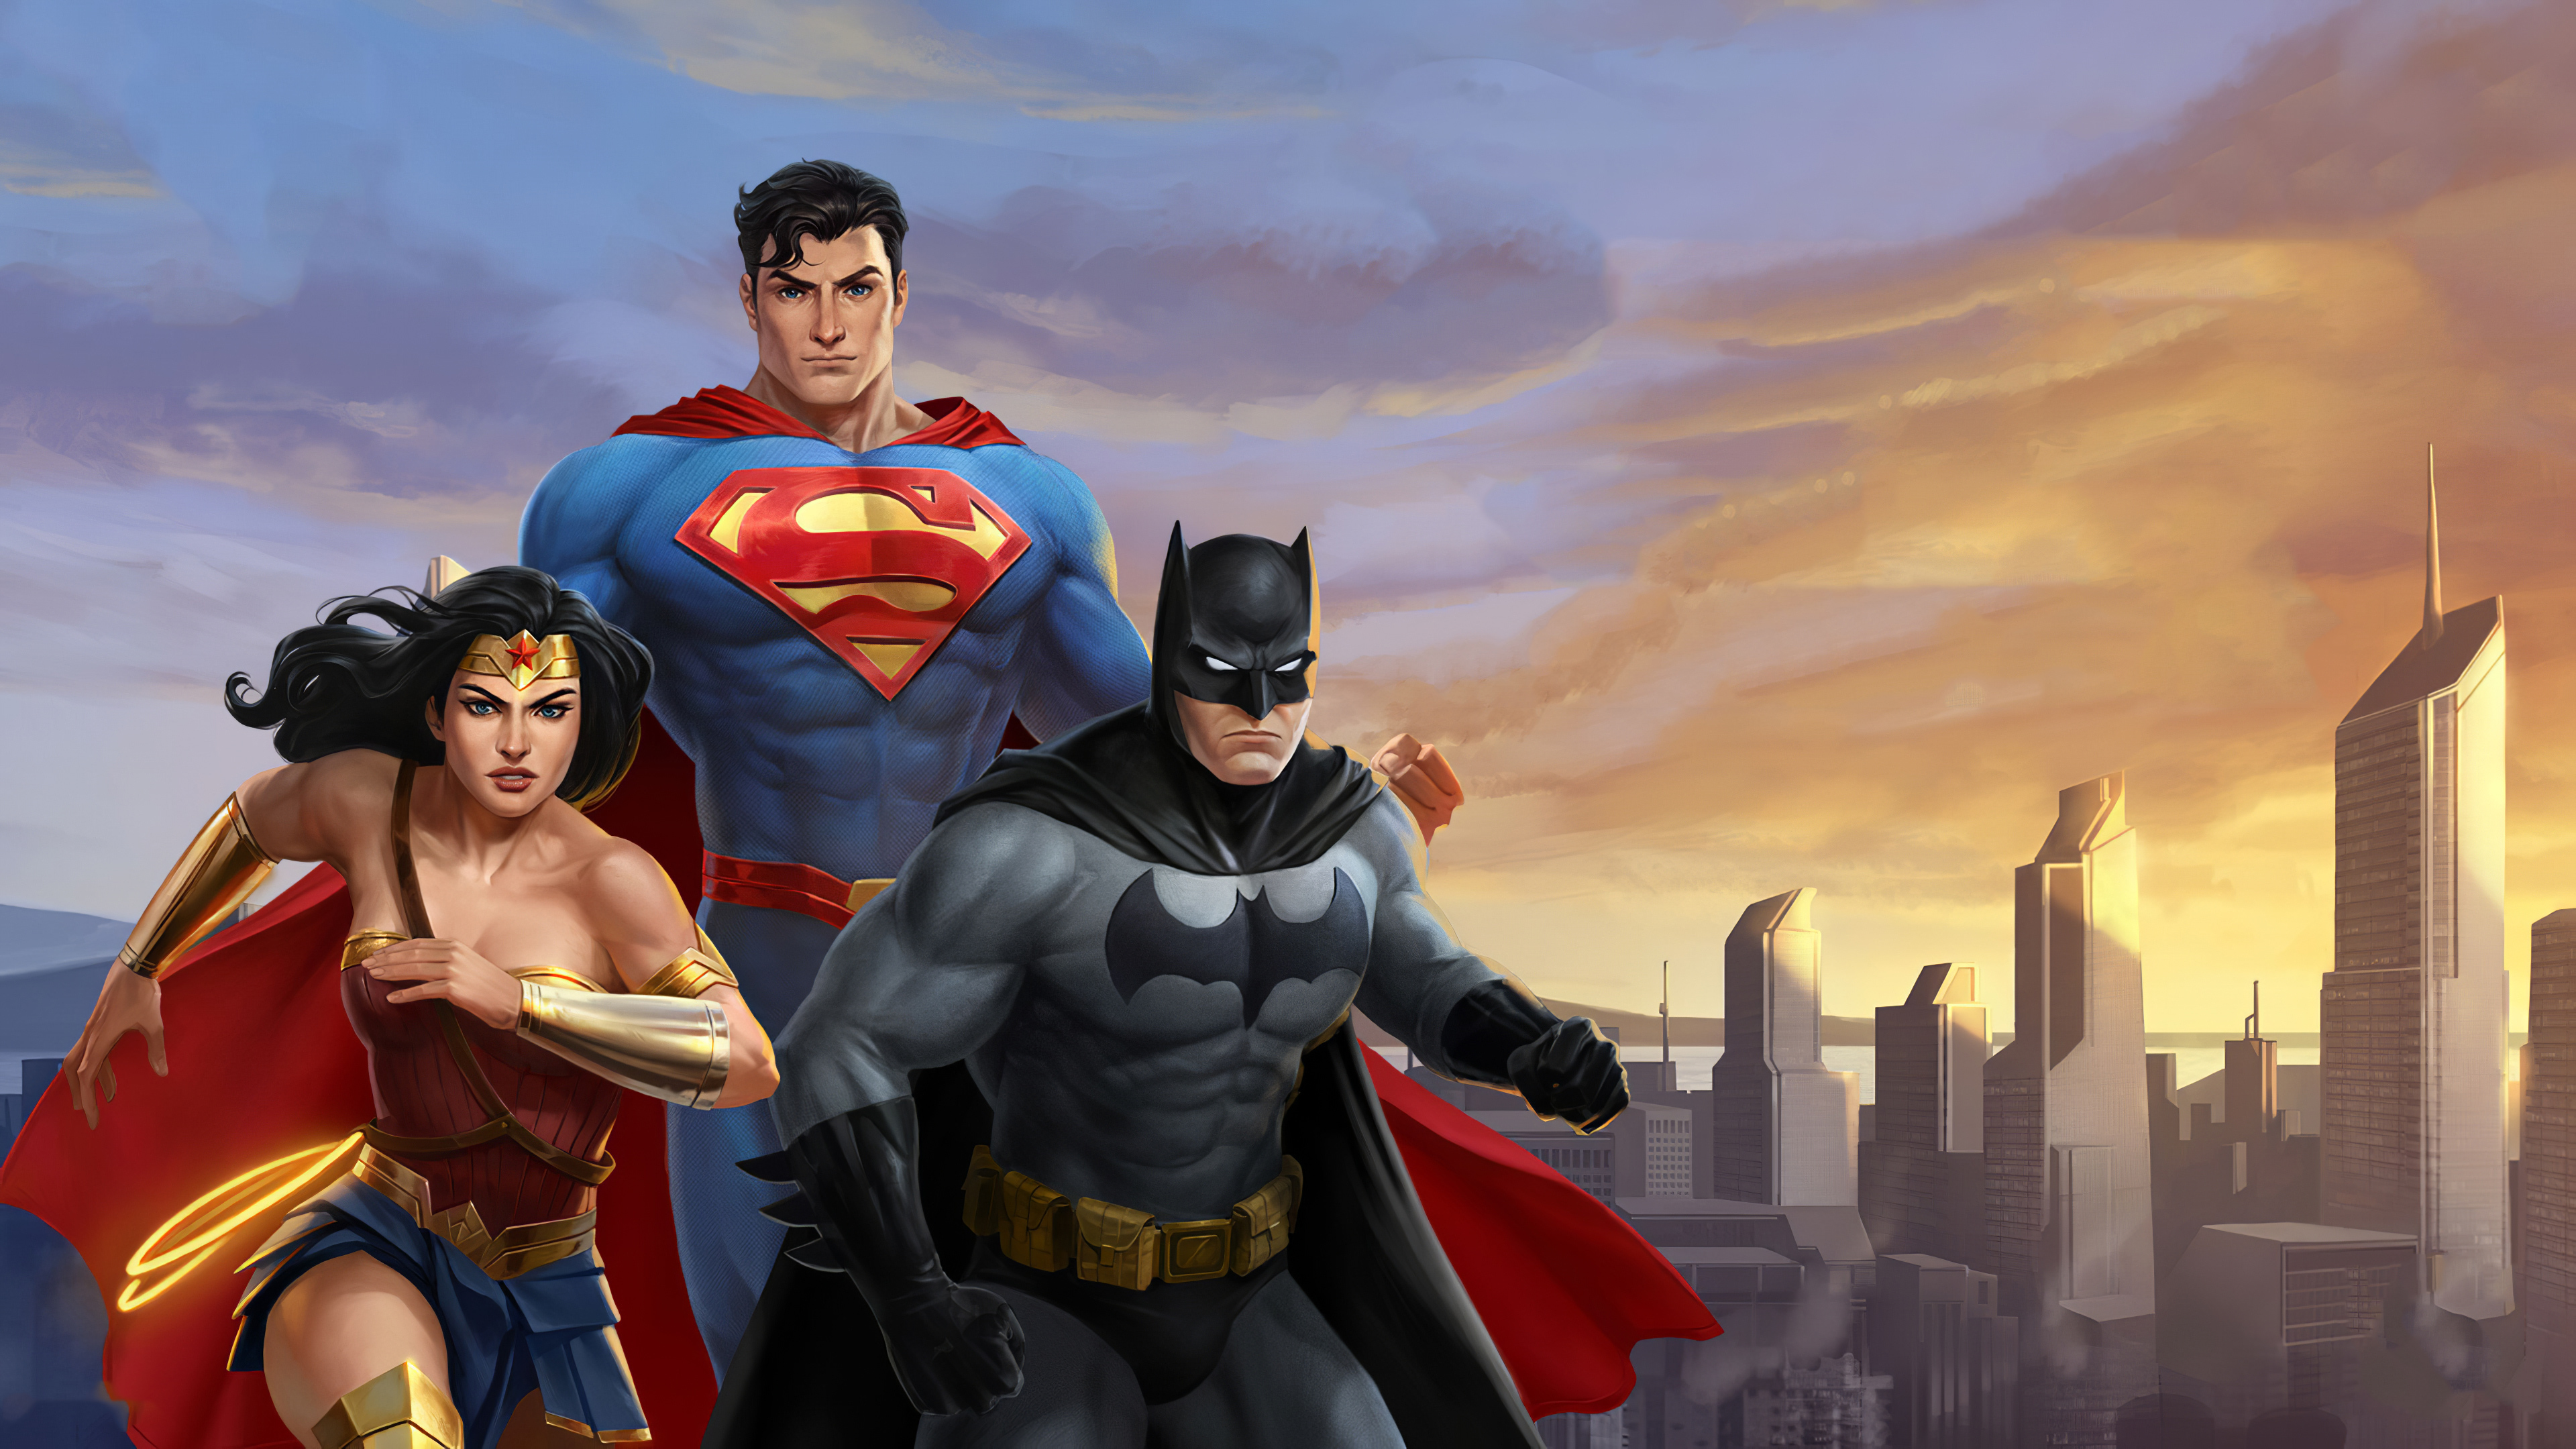 DC Comic Deathstroke 2020 Wallpaper, HD Superheroes 4K 